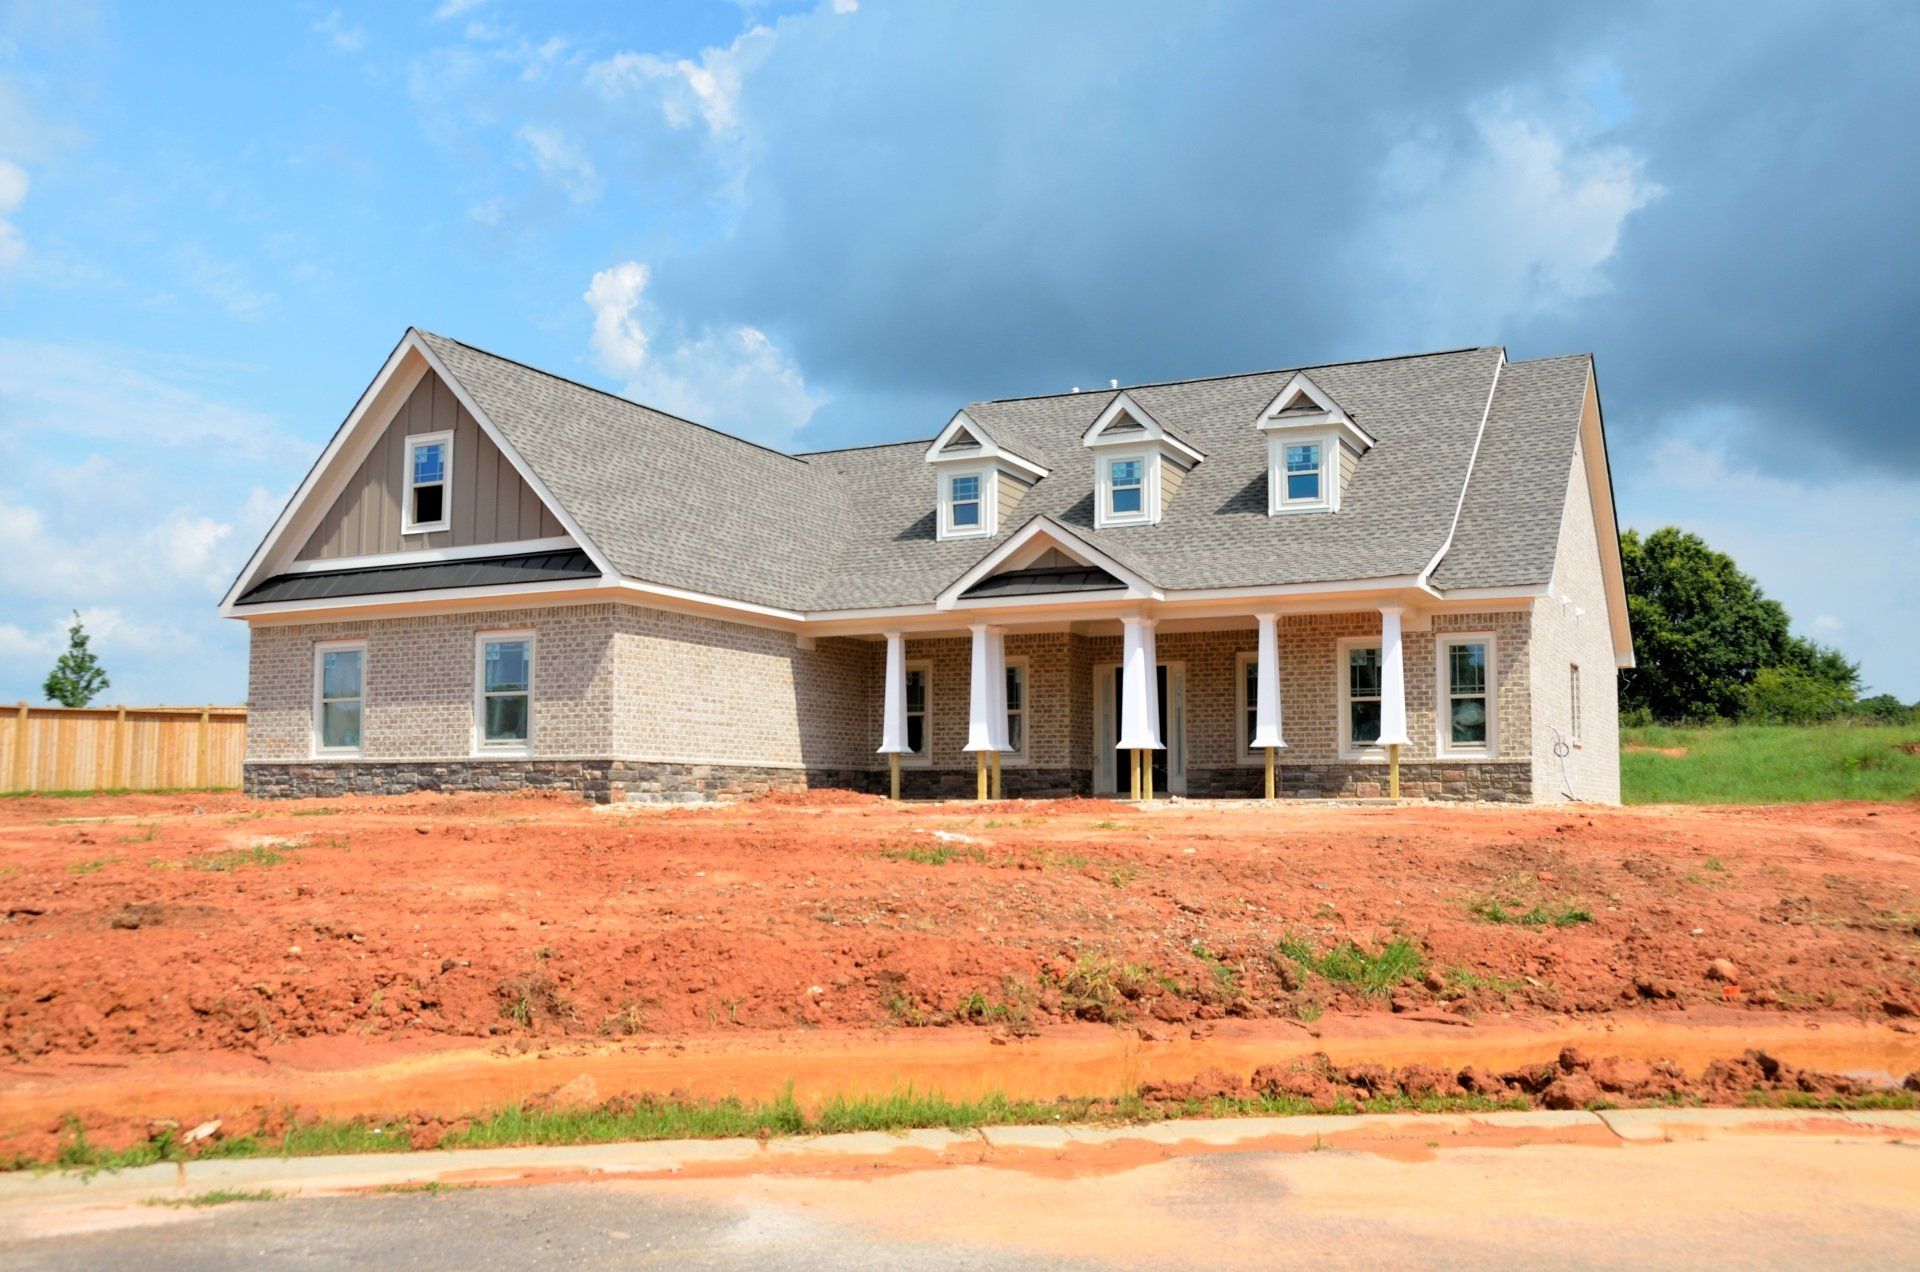 New home K.M. Cash Construction in Virginia Beach VA